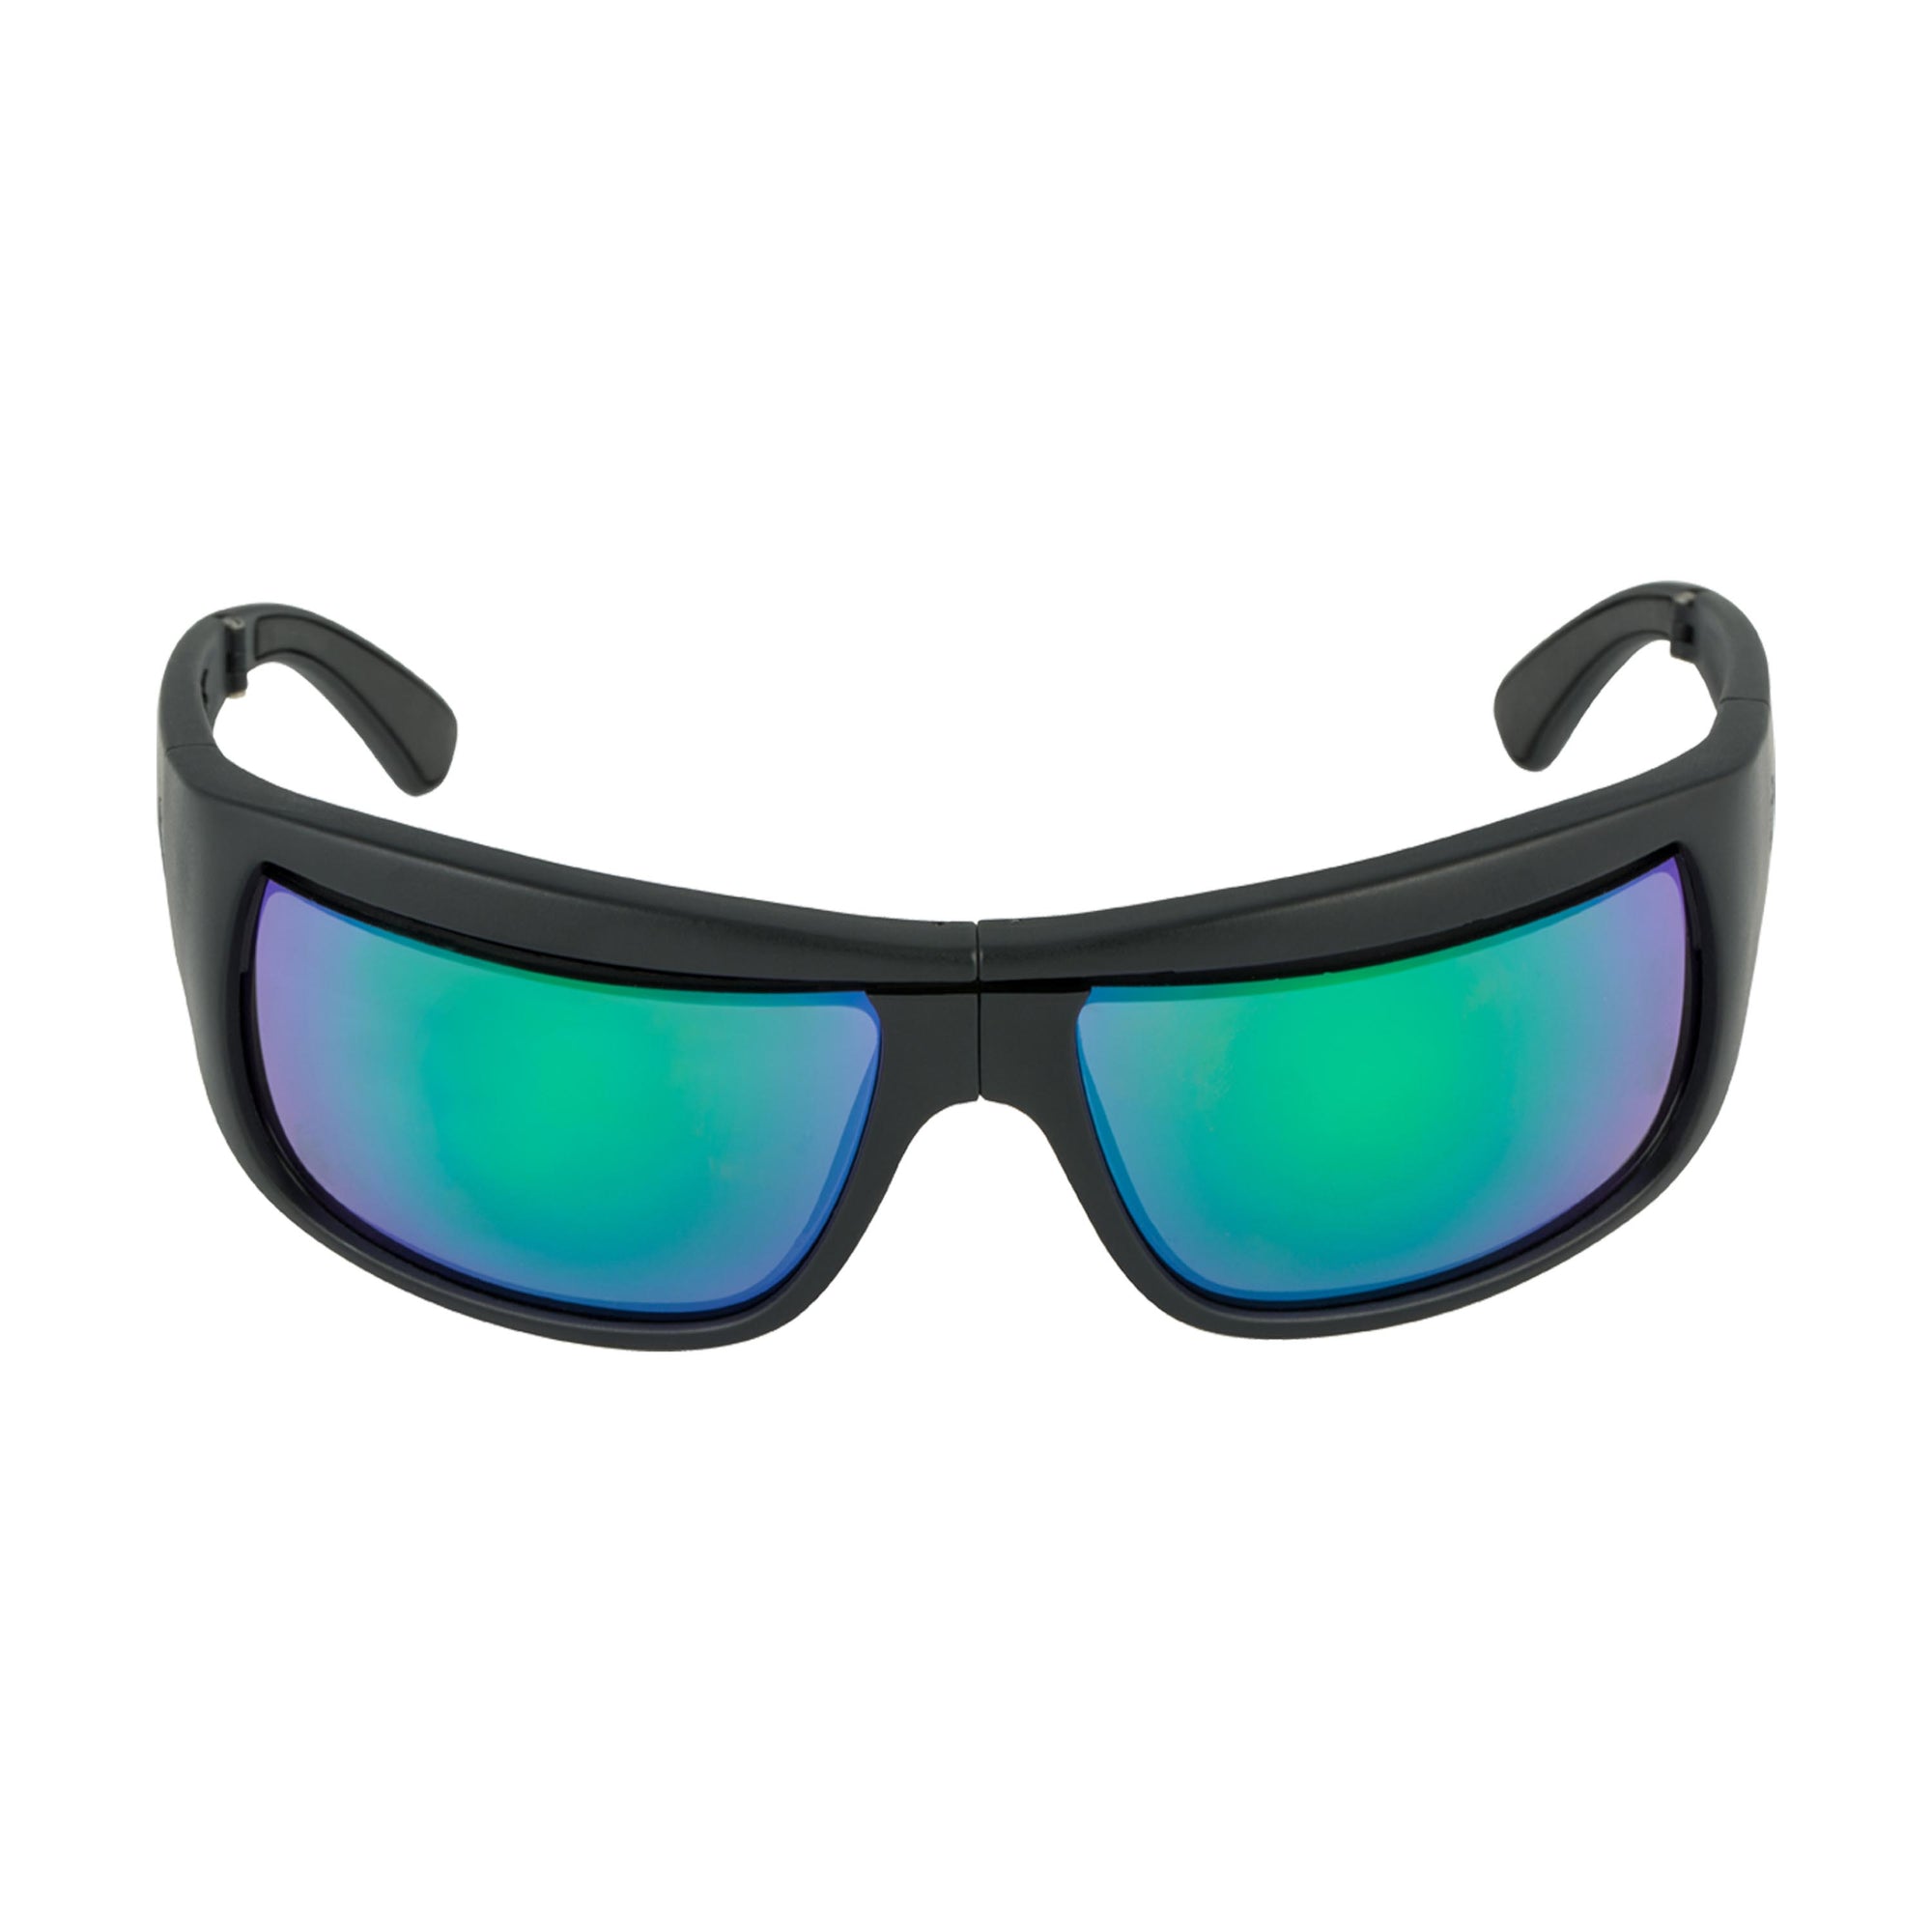 Popticals, Premium Compact Sunglasses, PopH2O, 010070-BMEN, Polarized Sunglasses, Matte Black Frame, Gray Lenses w/Green Mirror Finish, Glam View